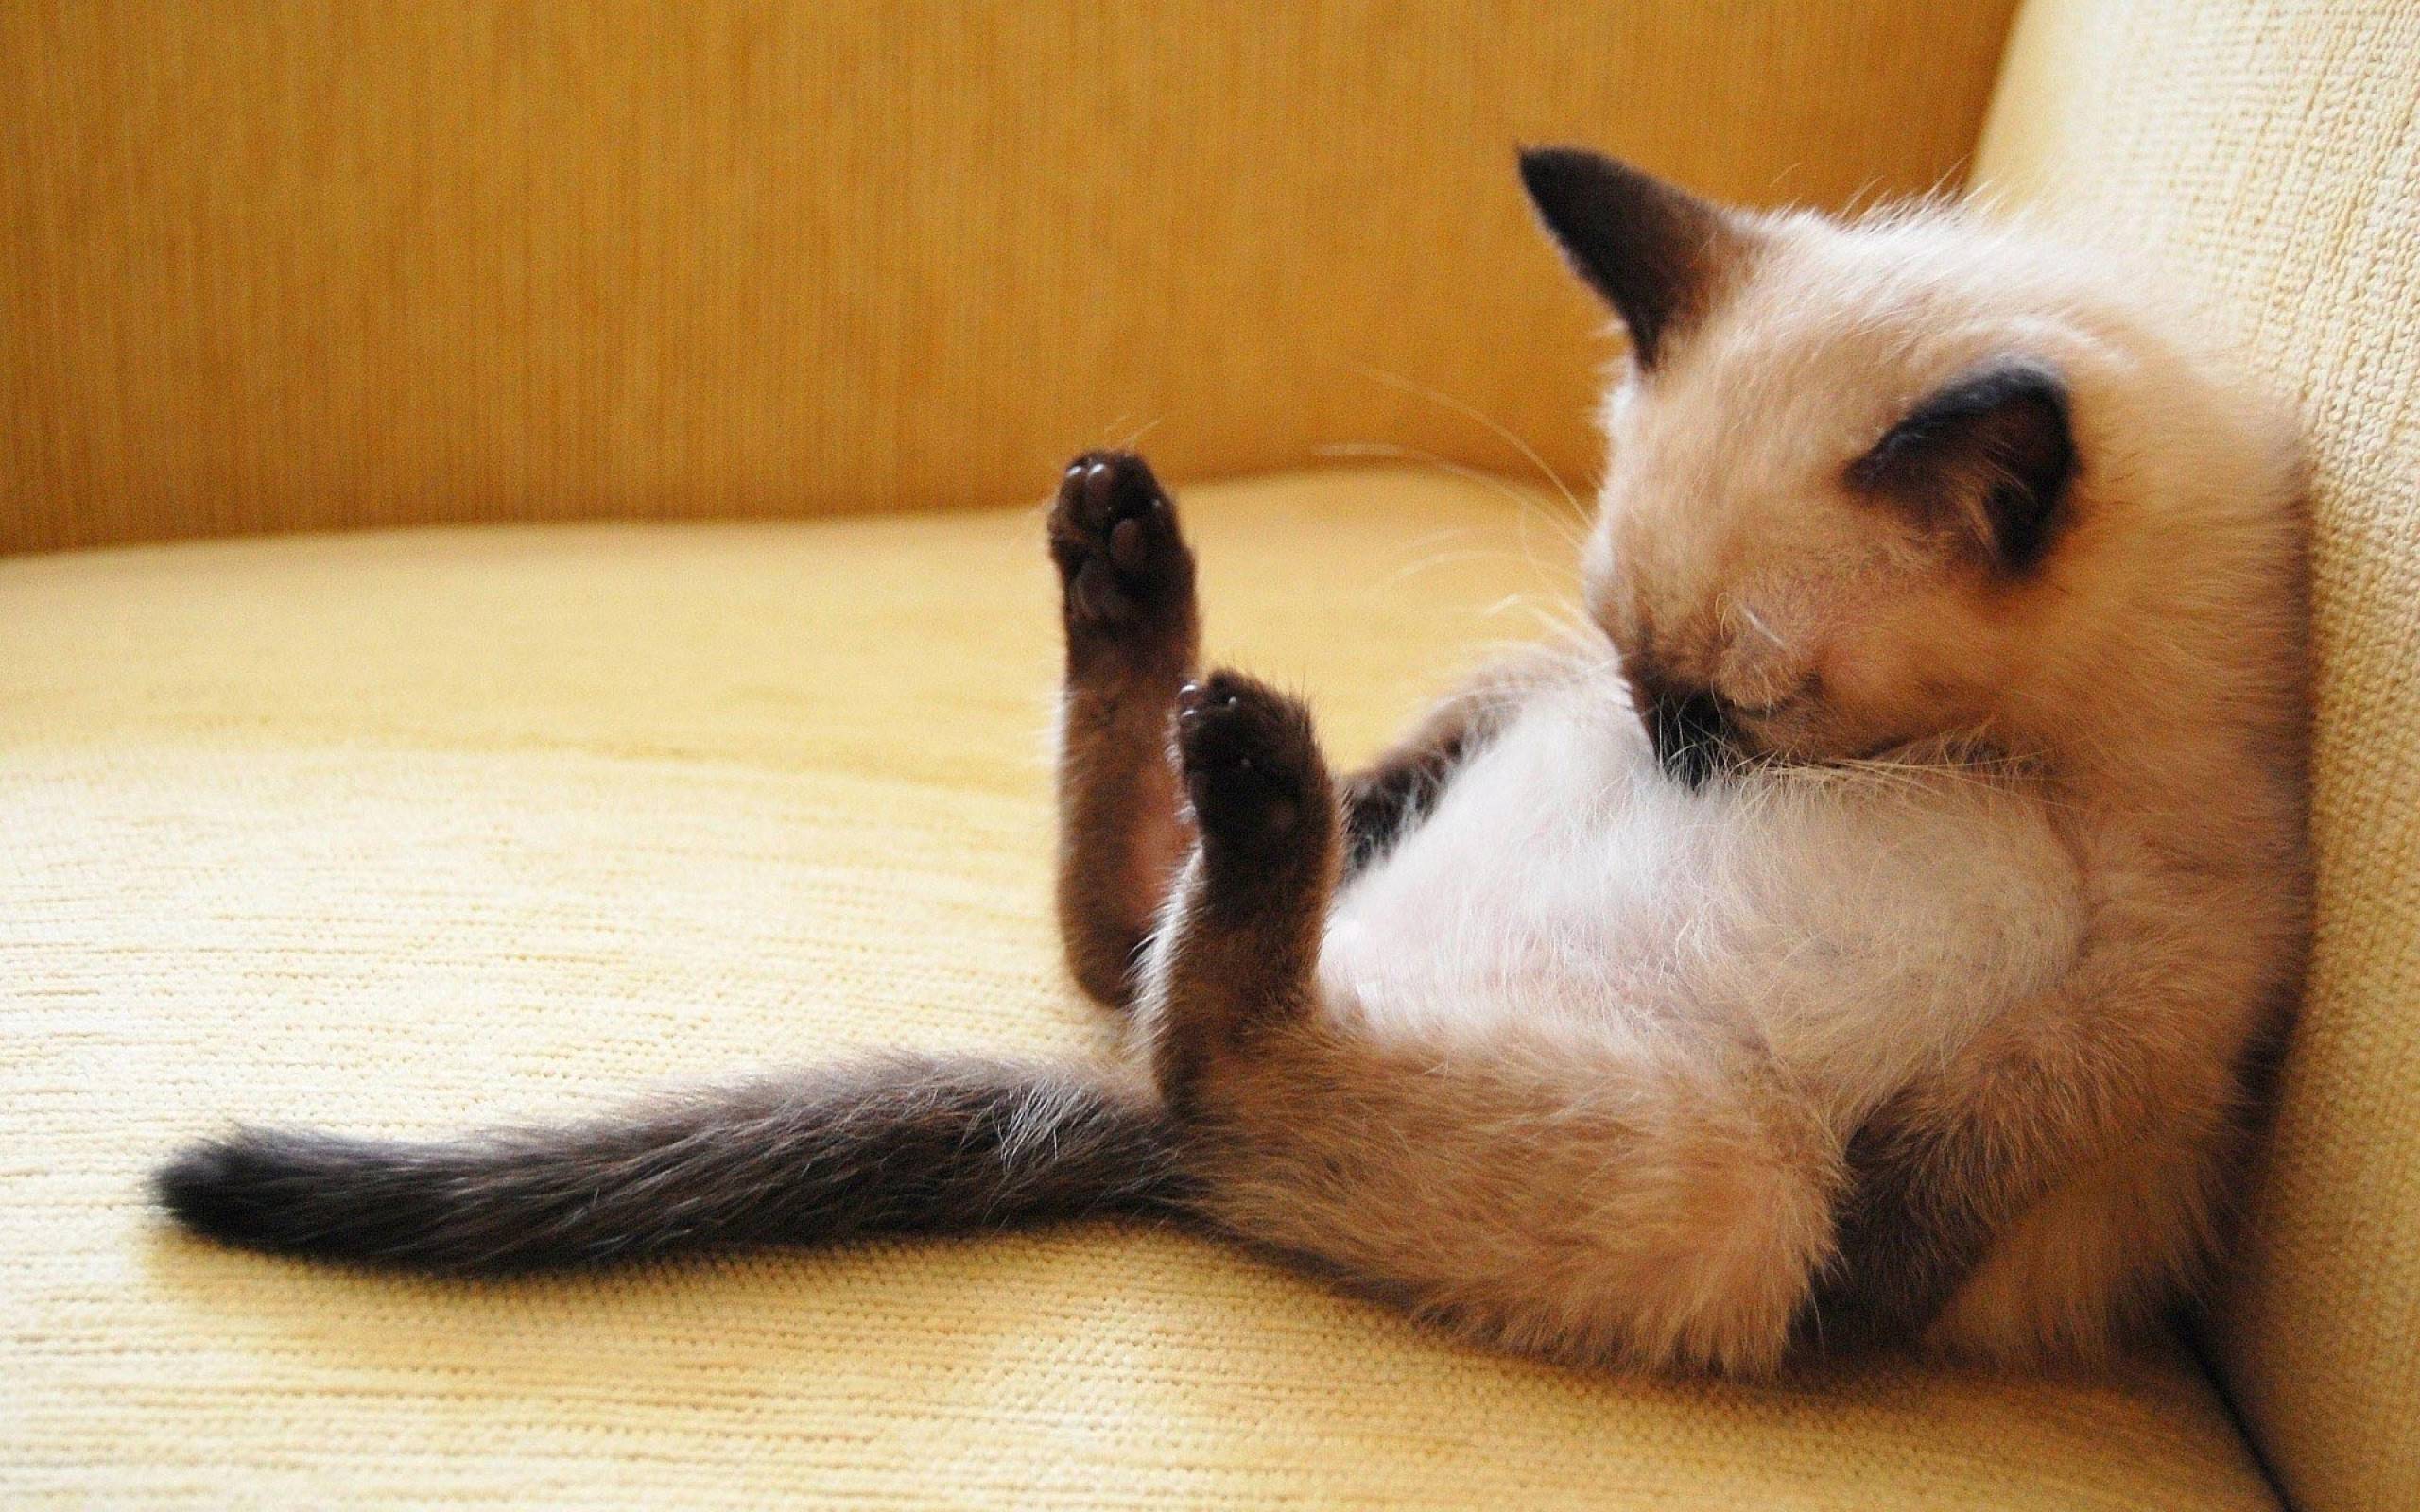 Wallpaper For > Cute Siamese Kittens Wallpaper